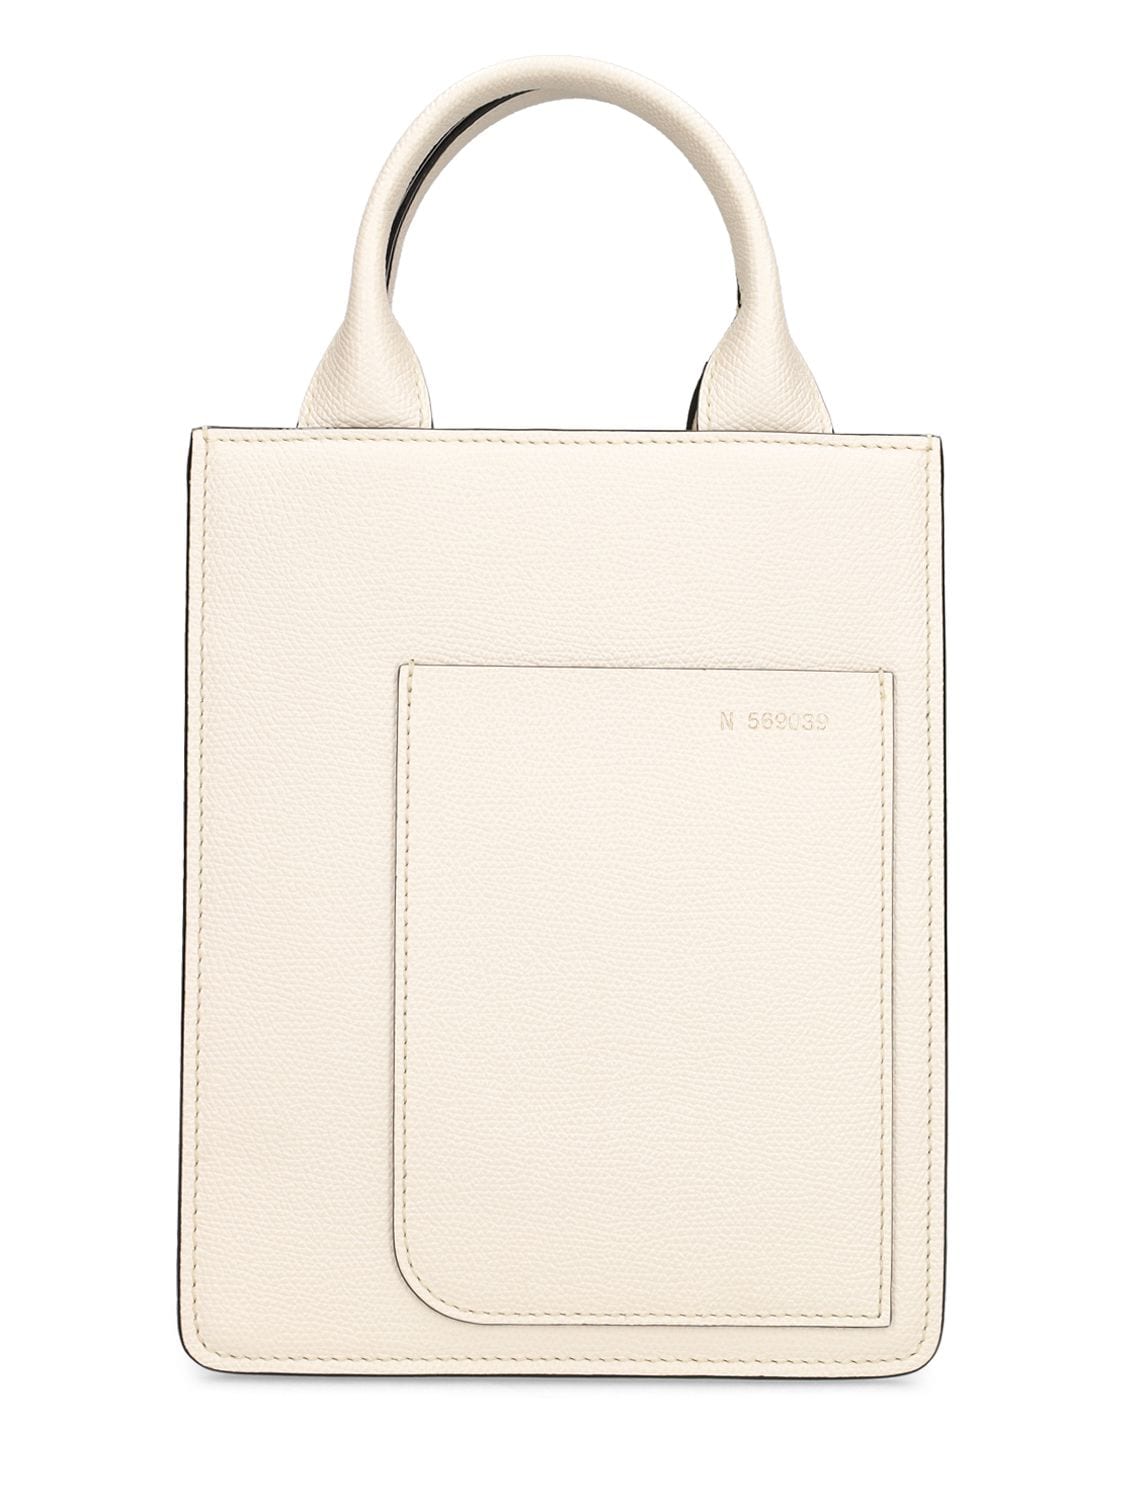 Image of Mini Boxy Shopping Top Handle Bag